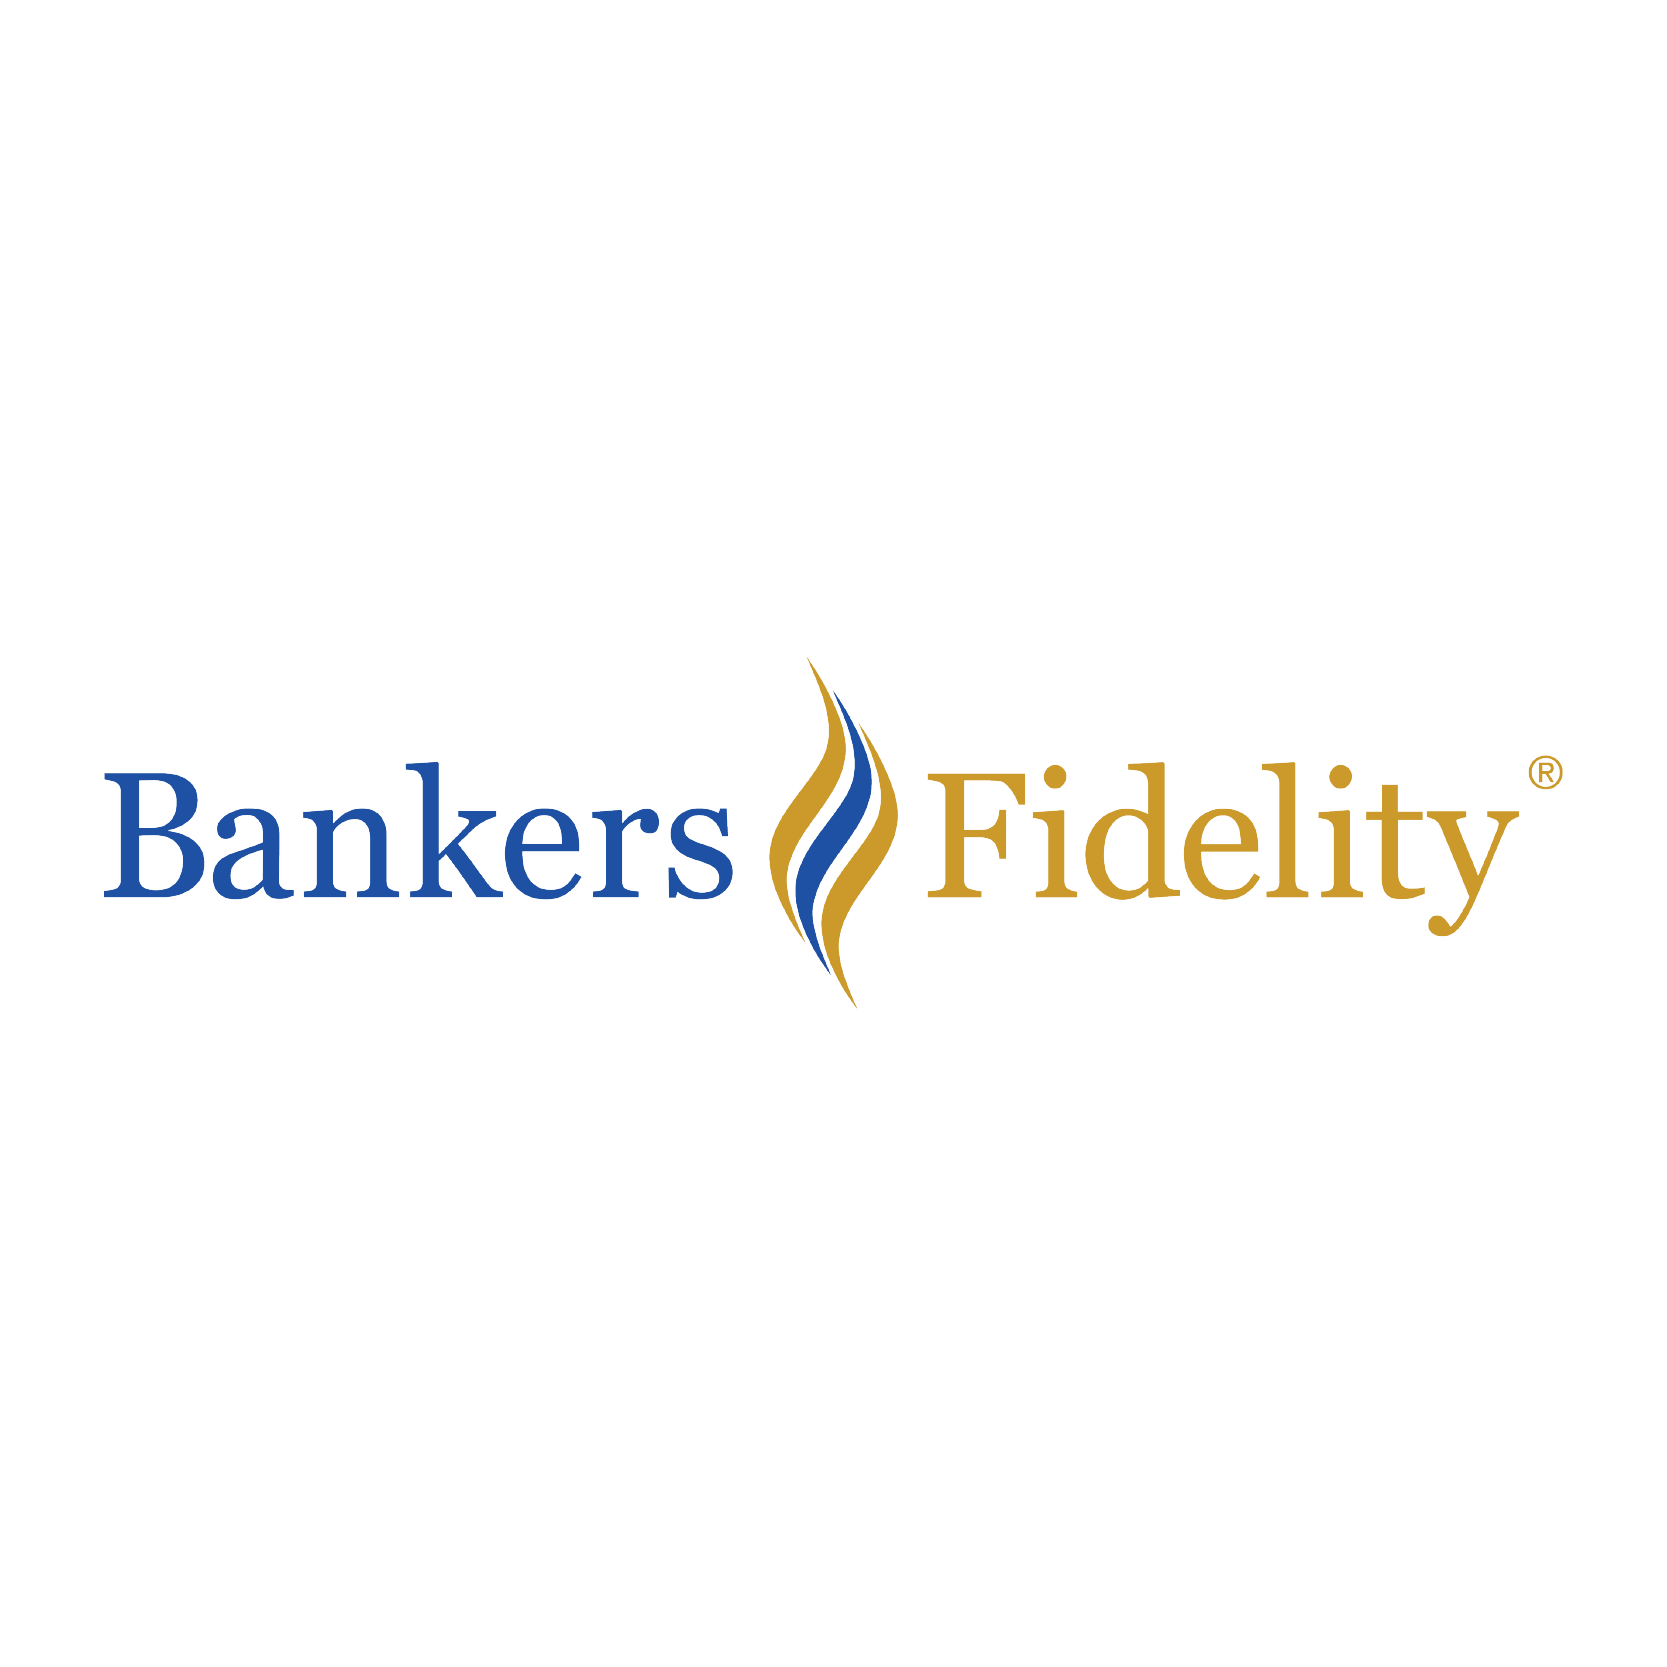 Bankers Fidelity